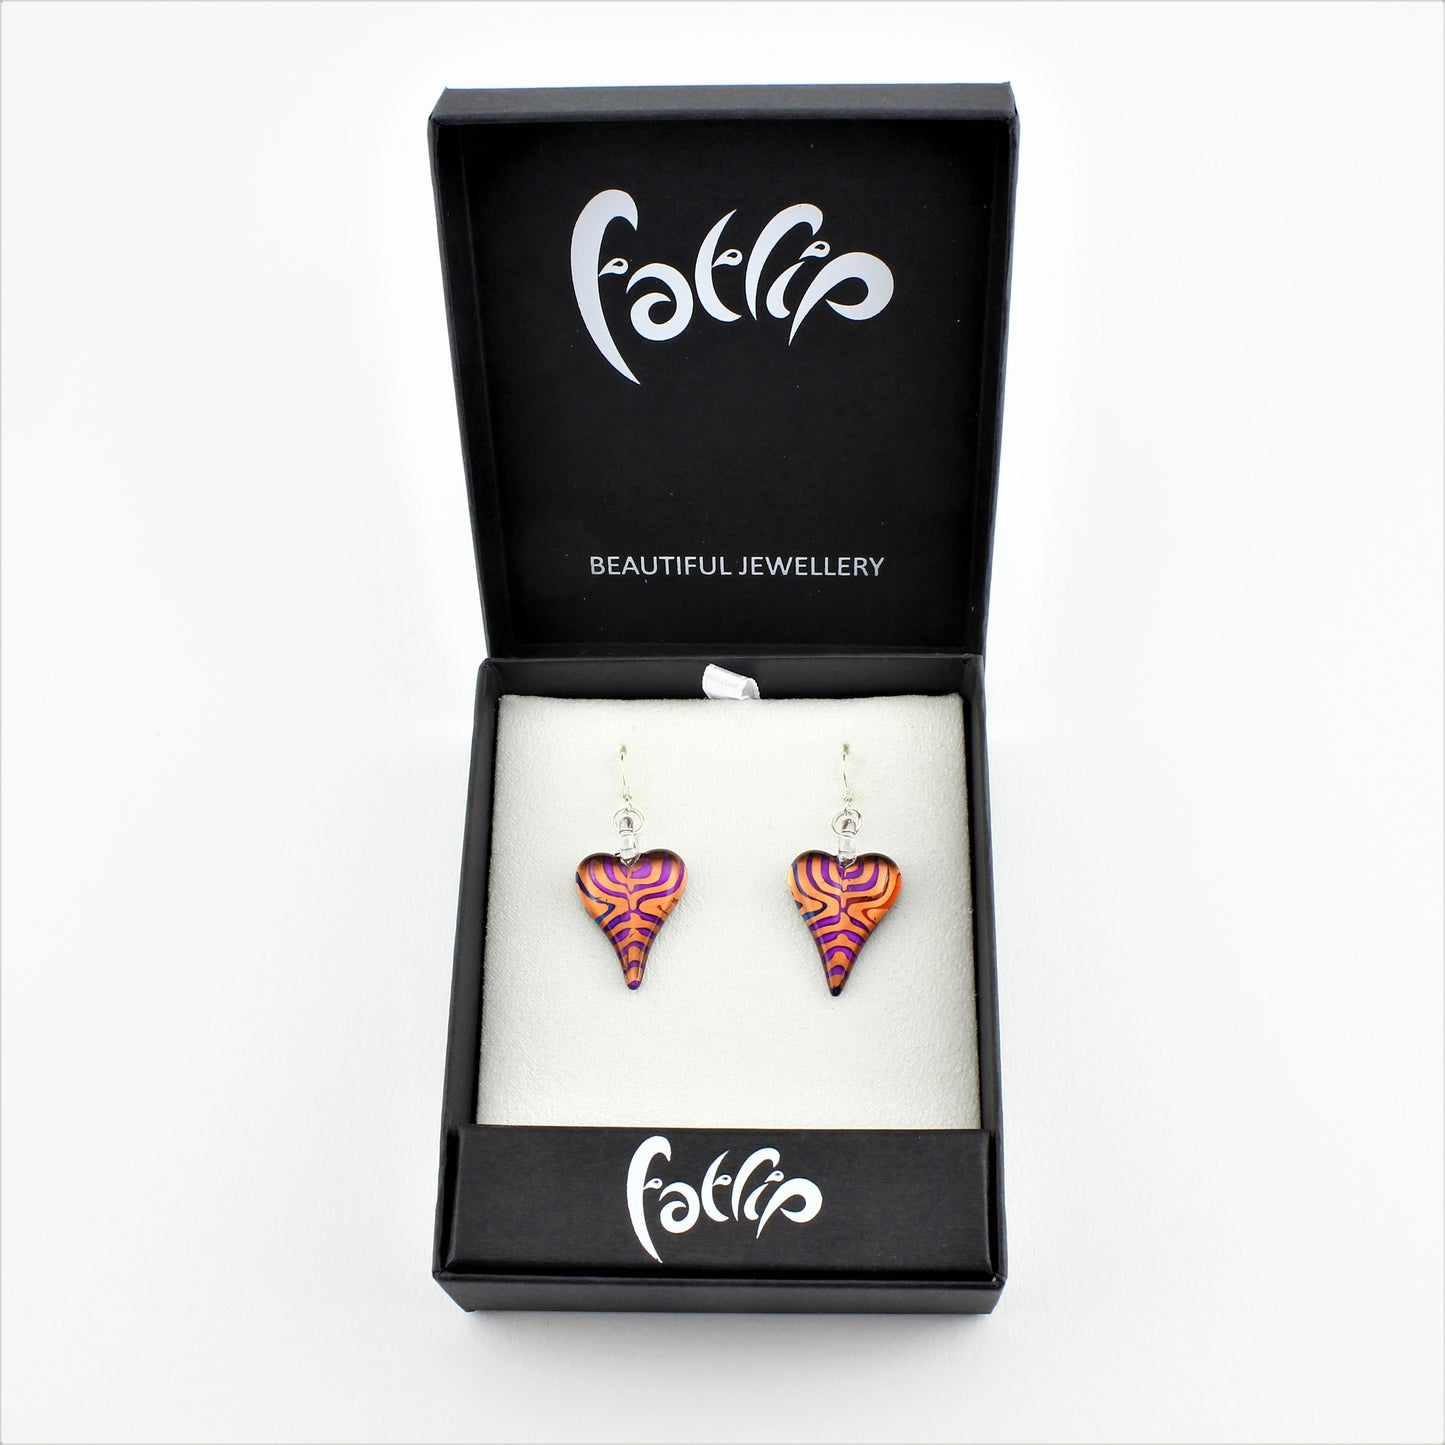 SWE573 - Multi Coloured Glass Heart Earrings